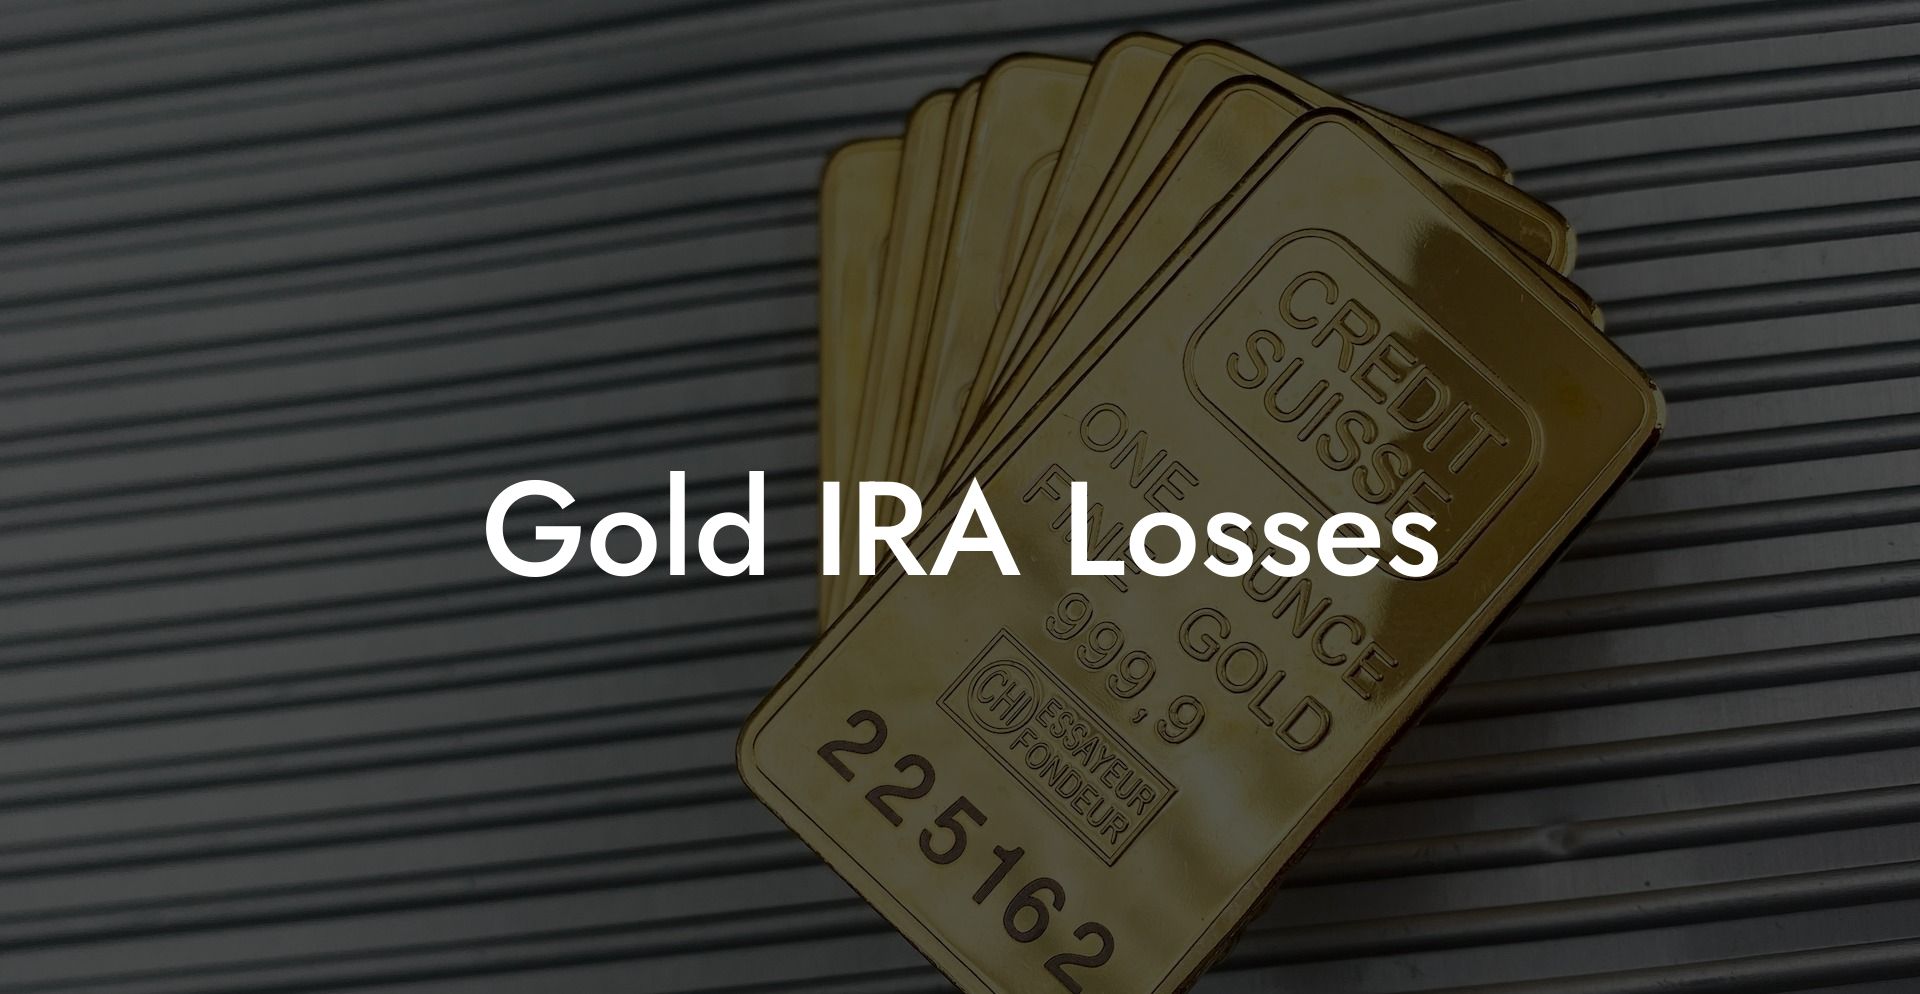 Gold IRA Losses